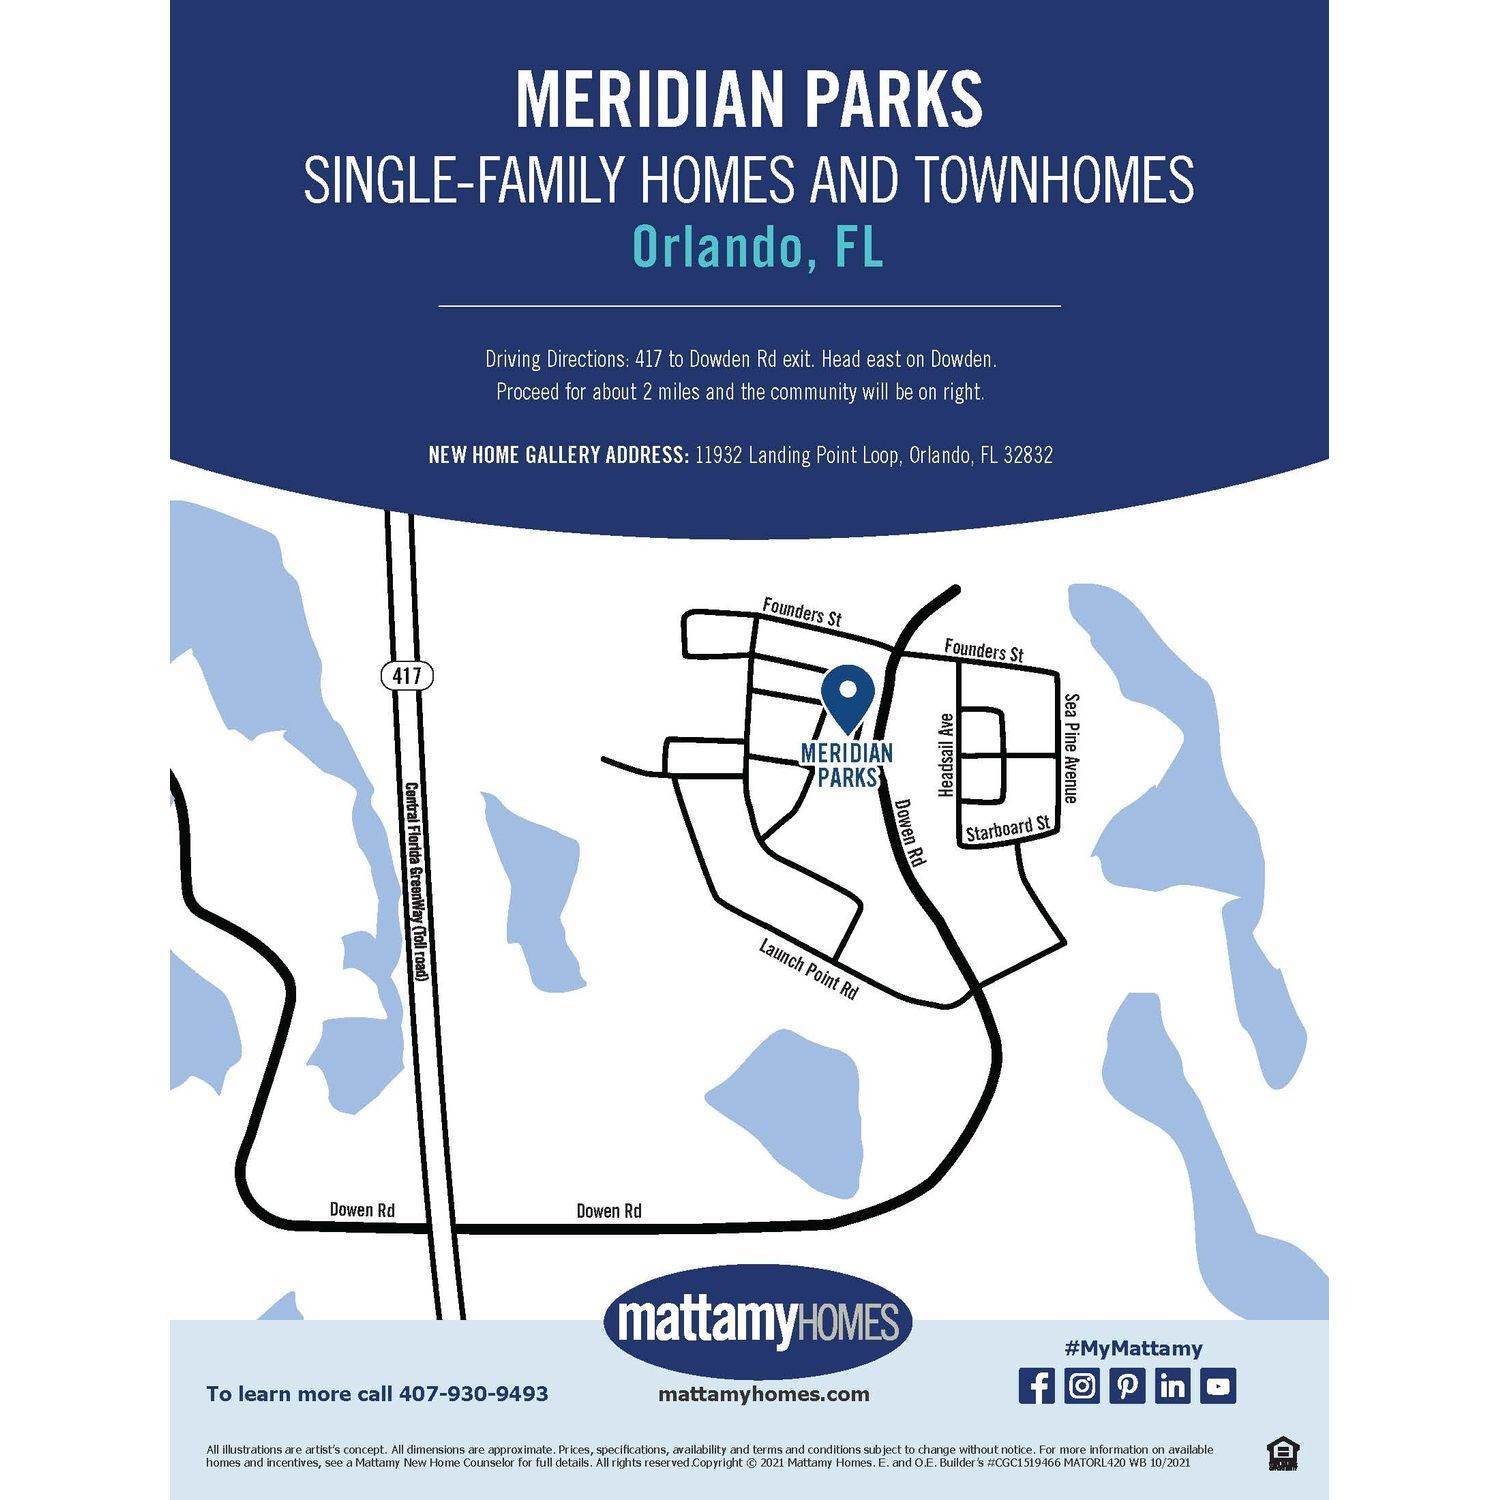 Meridian Parks building at 12471 Shipwatch Street, Orlando, FL 32832